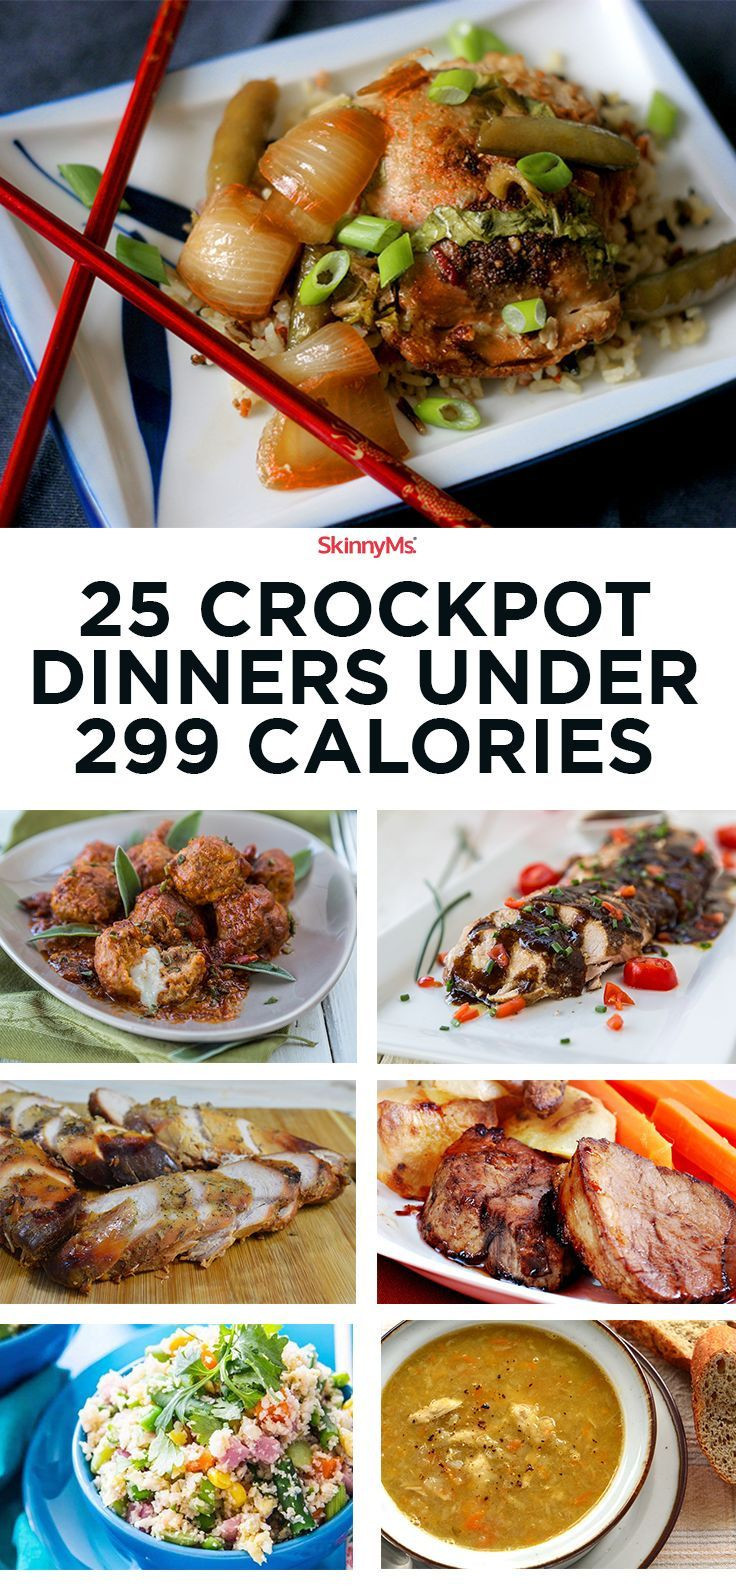 Low Cholesterol Crock Pot Recipes
 The Best Ideas for Low Cholesterol Crock Pot Recipes